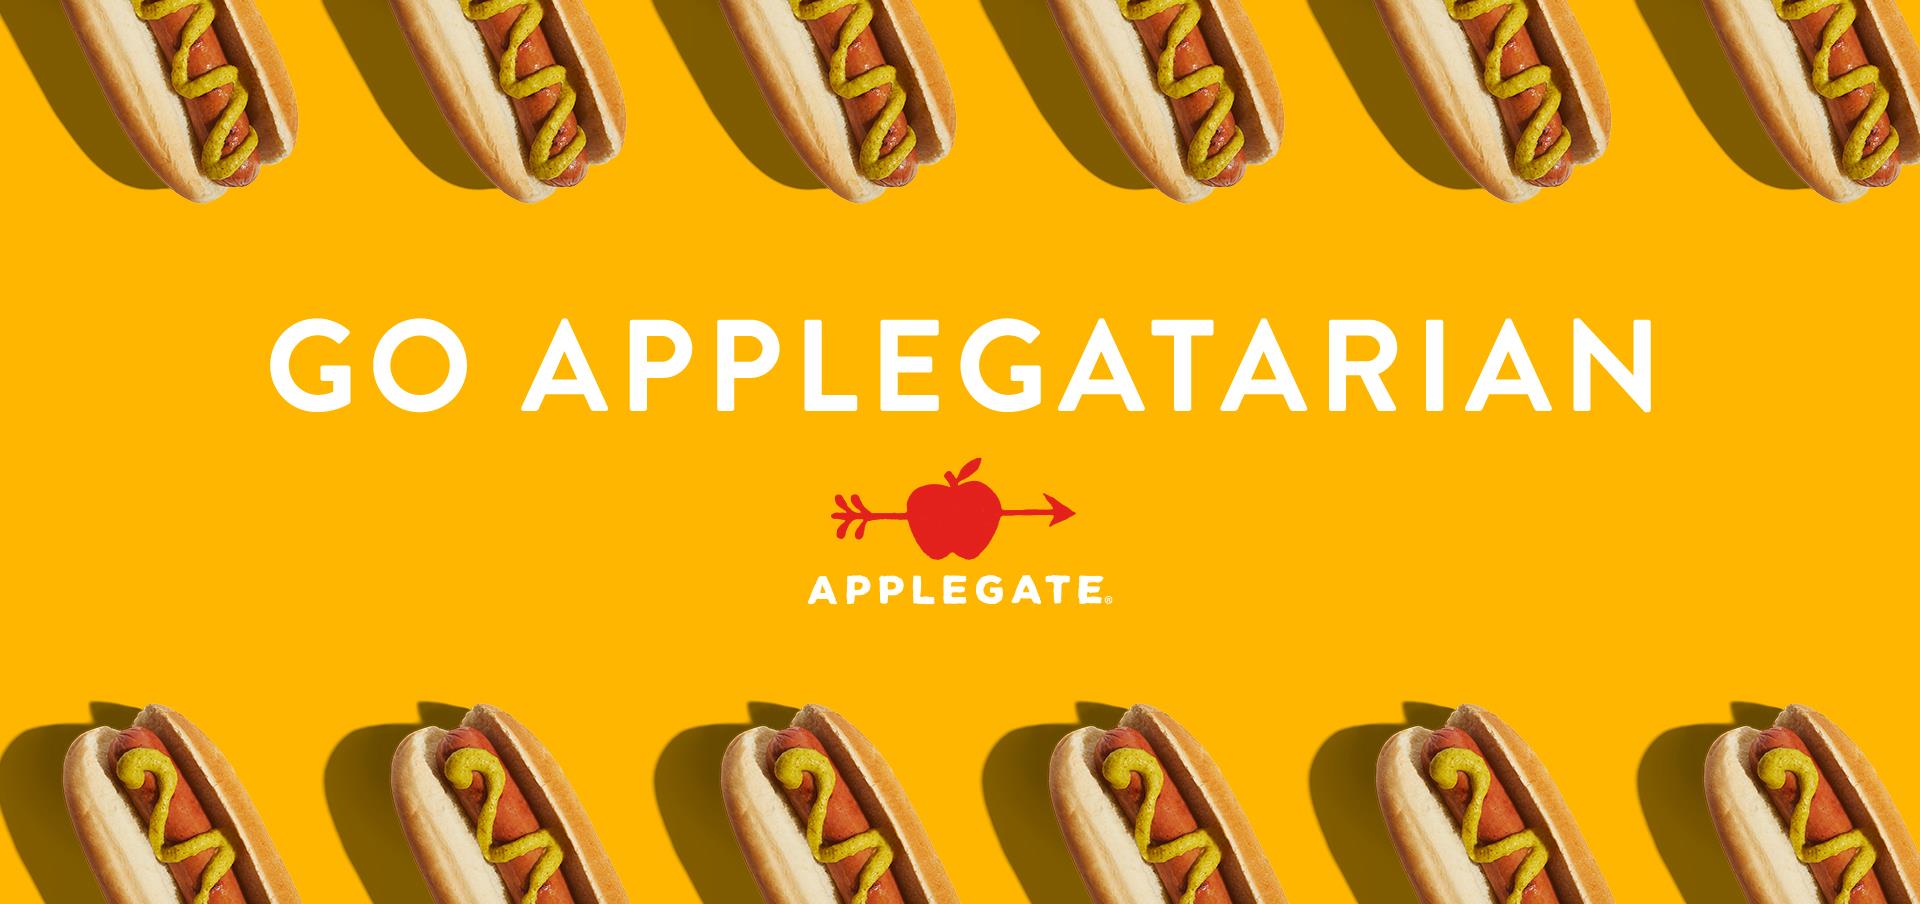 Applegate: Go Applegatarian